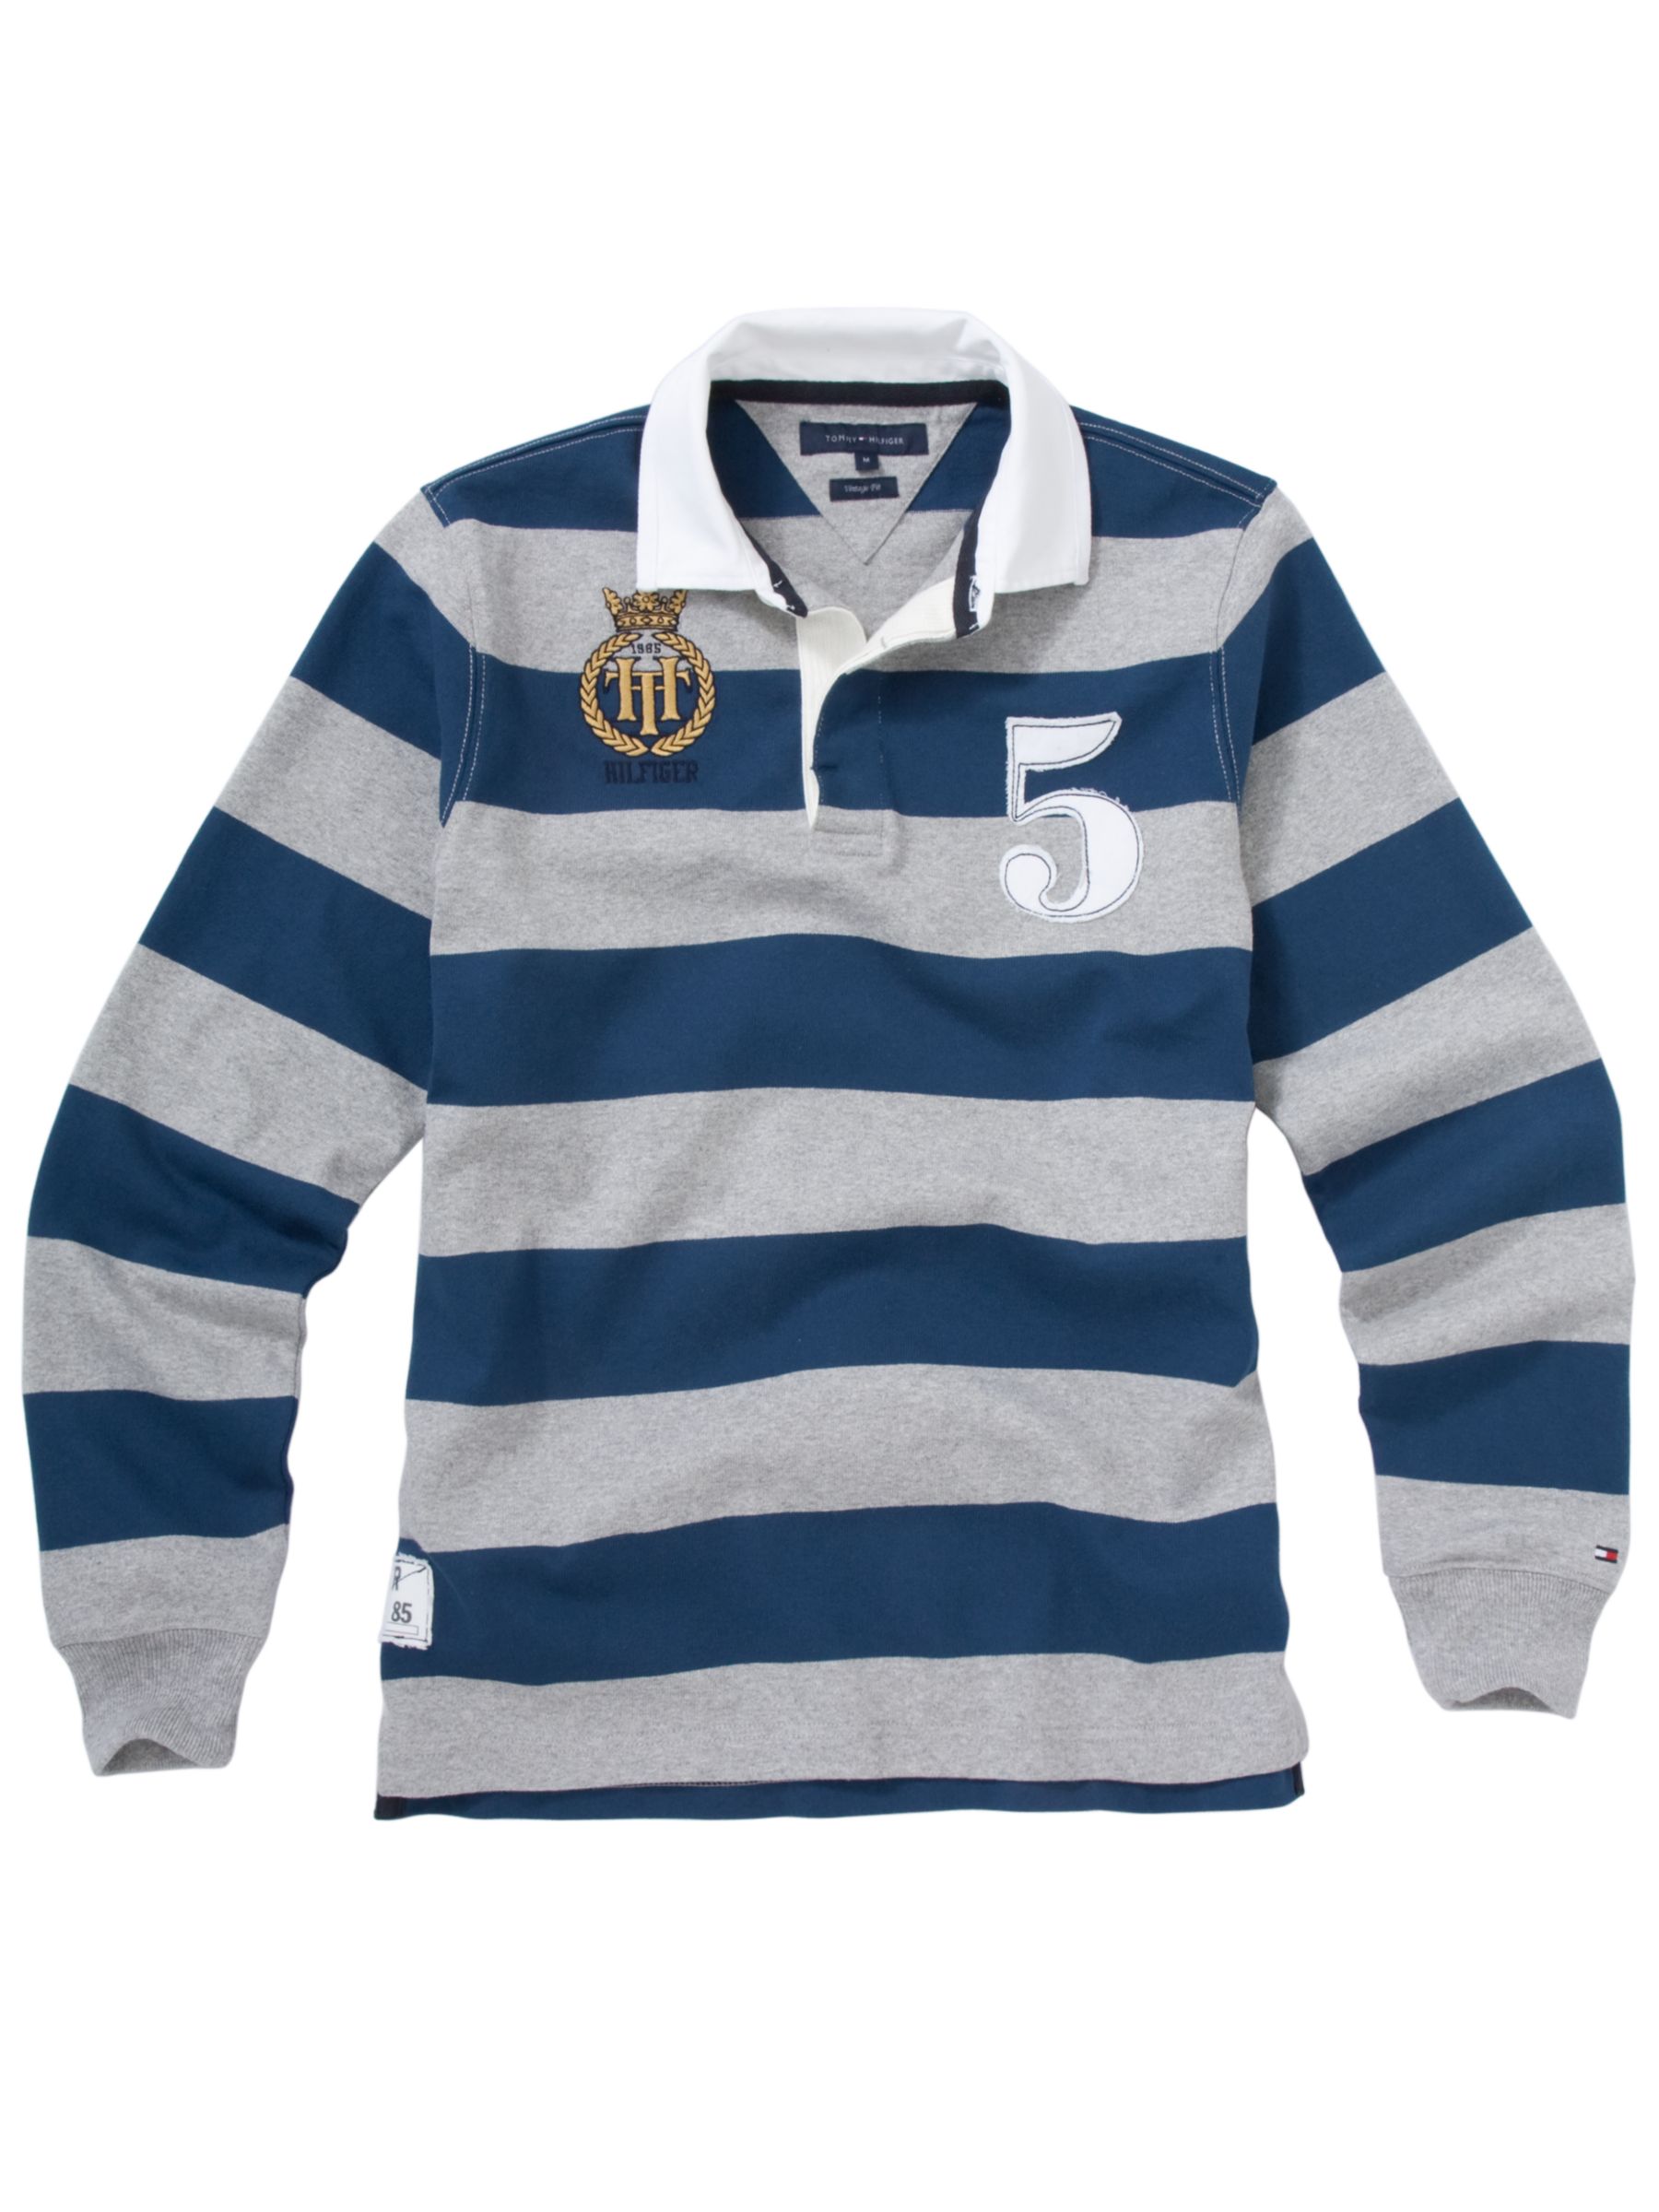 Stripe Rugby Shirt, Blue